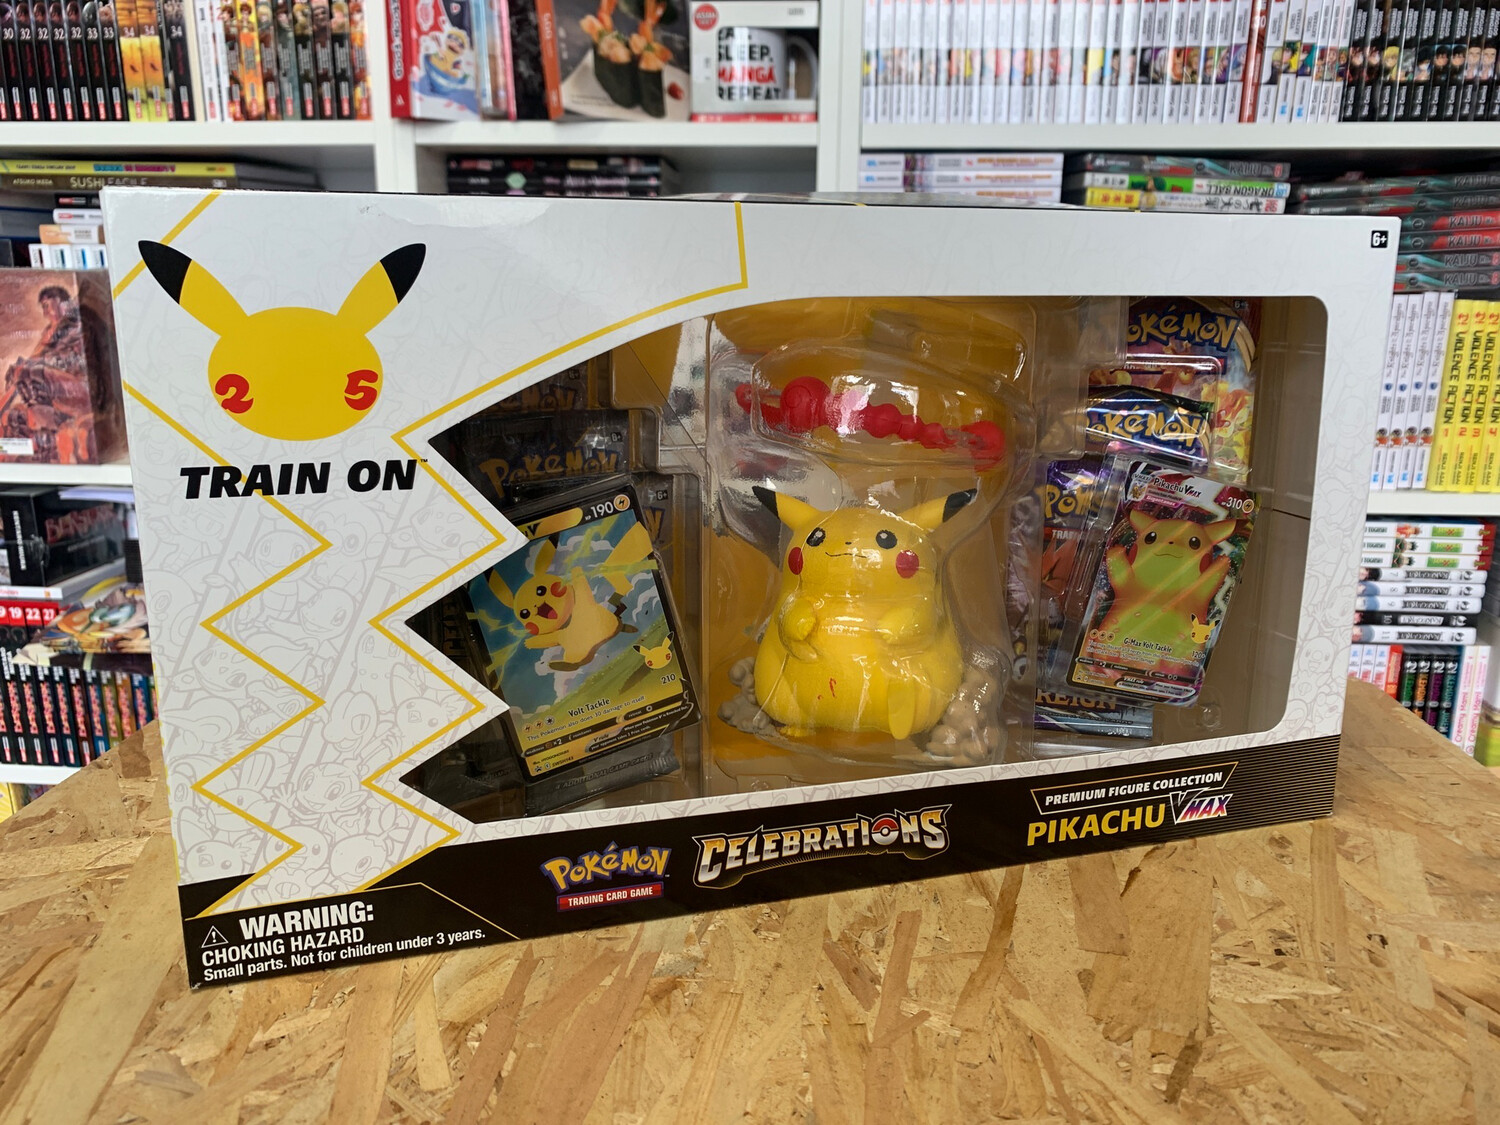 Premium figure collection Pikachu vmax